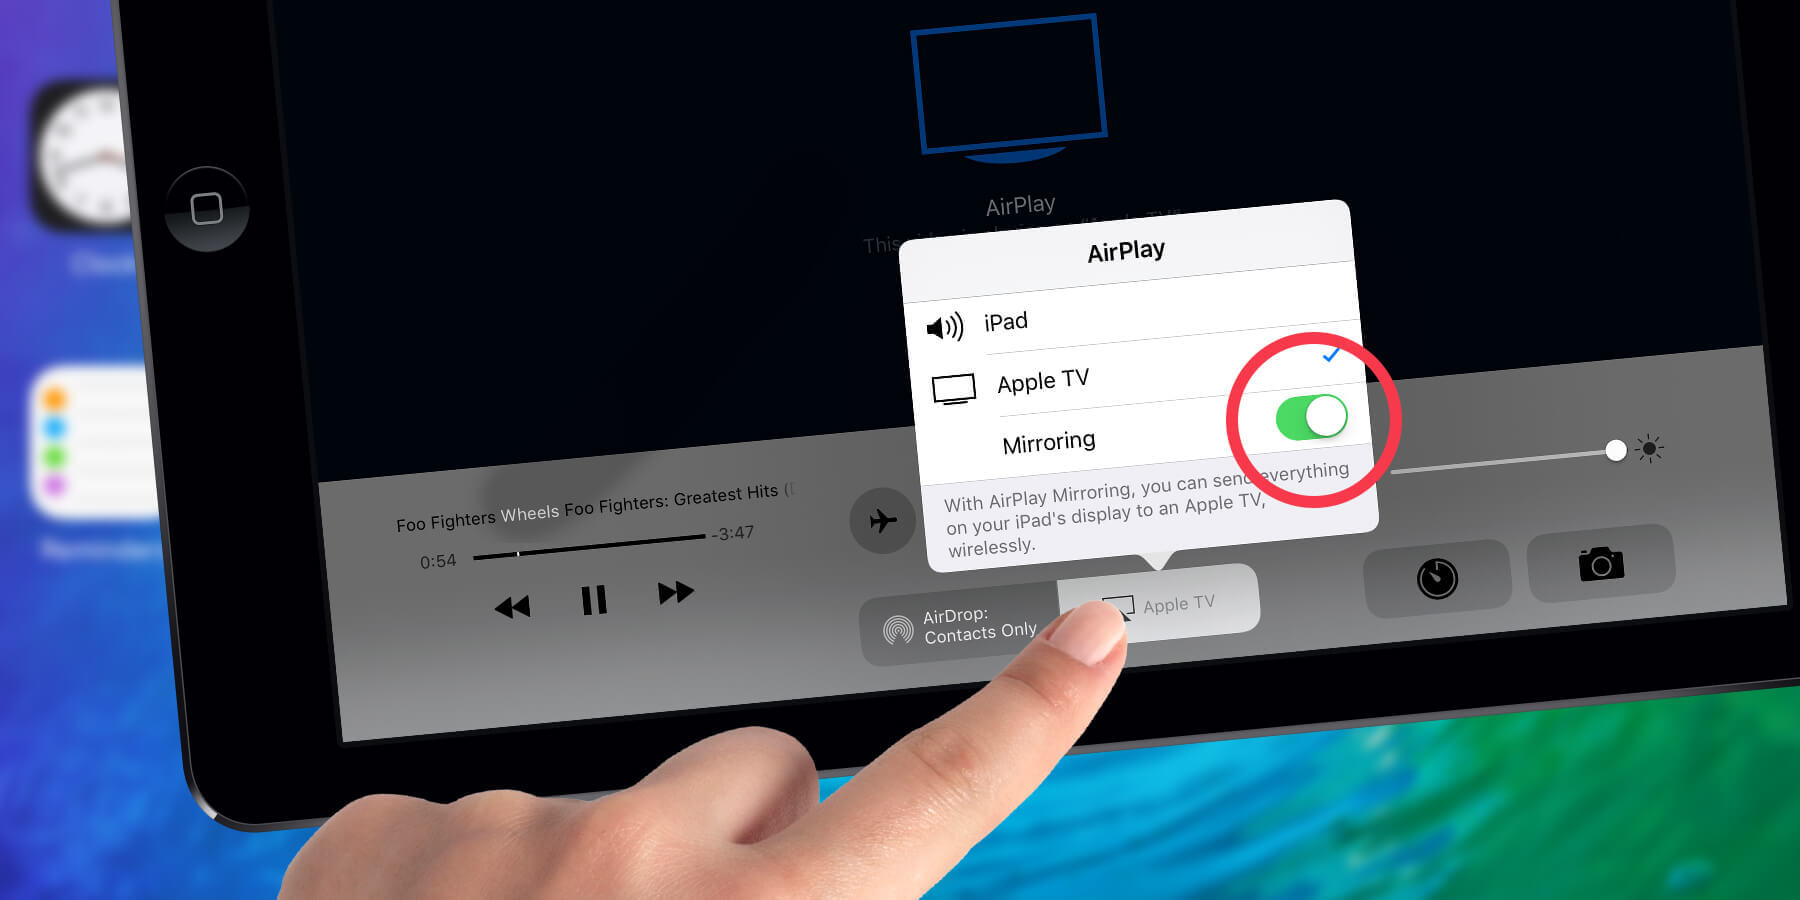 Ios 9 Using Airplay To Mirror An Ipad, How Can I Mirror My Ipad To Apple Tv